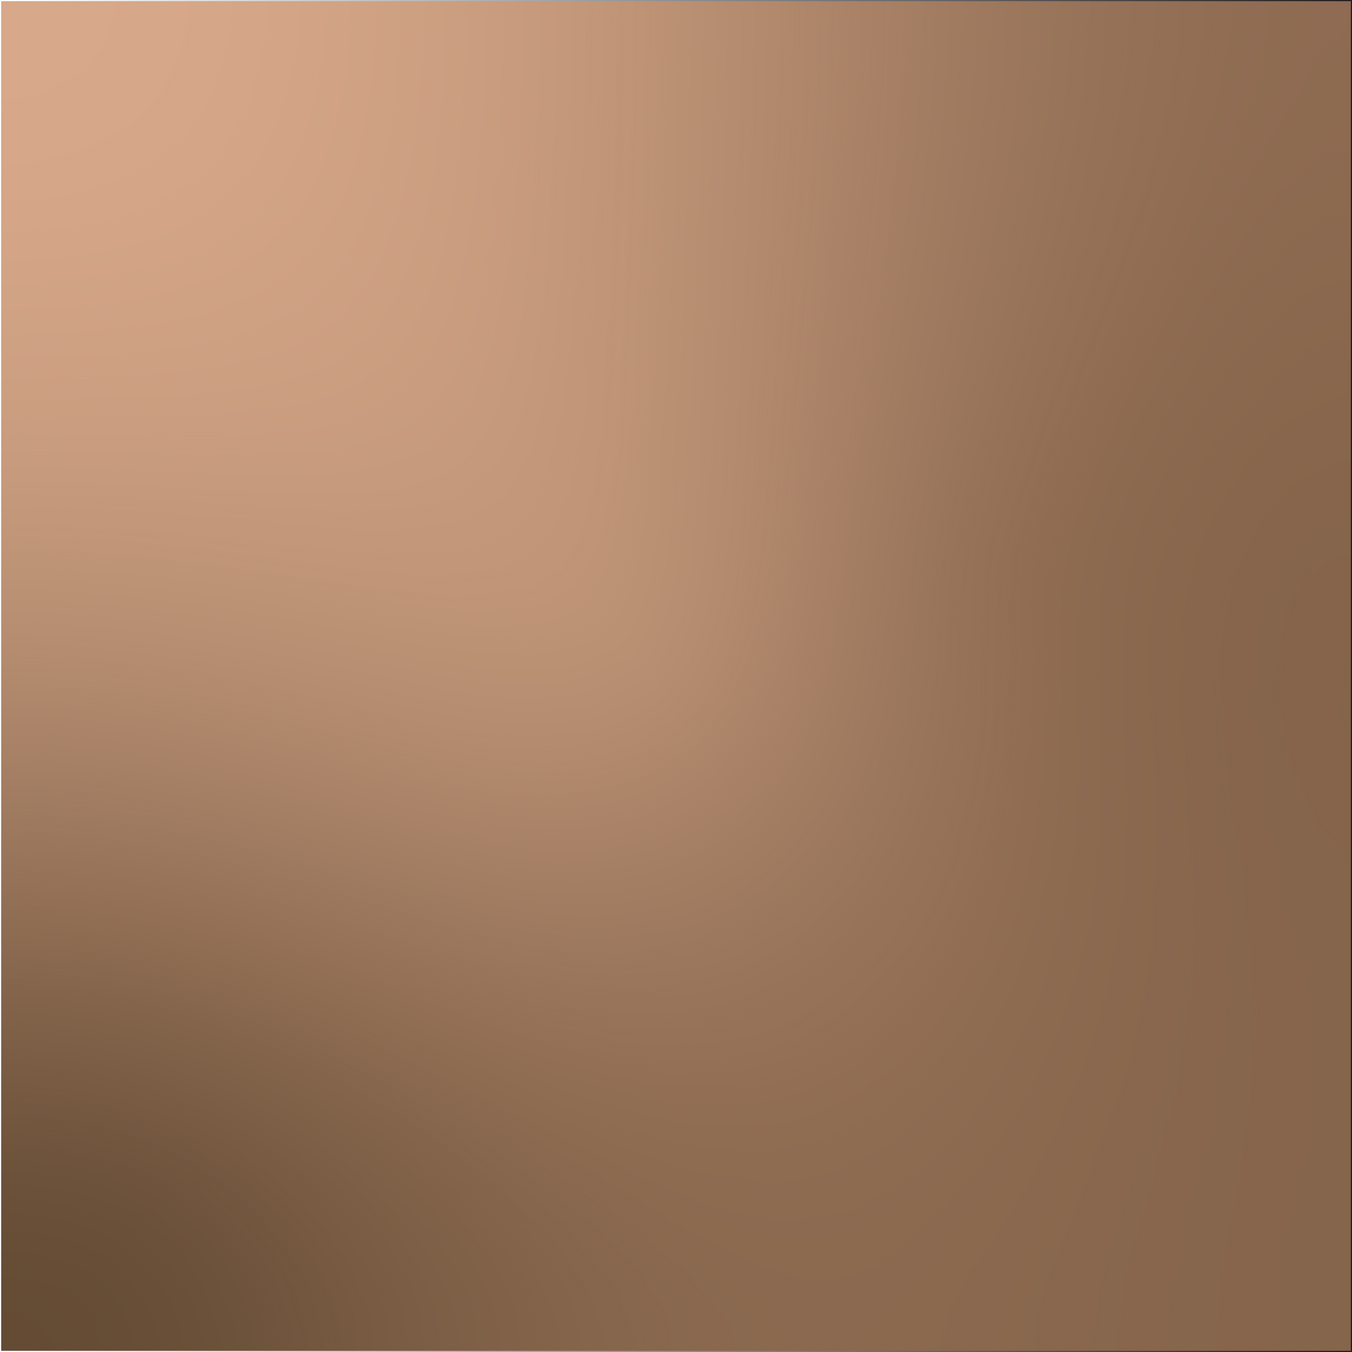 Nude Brown Gradient 03